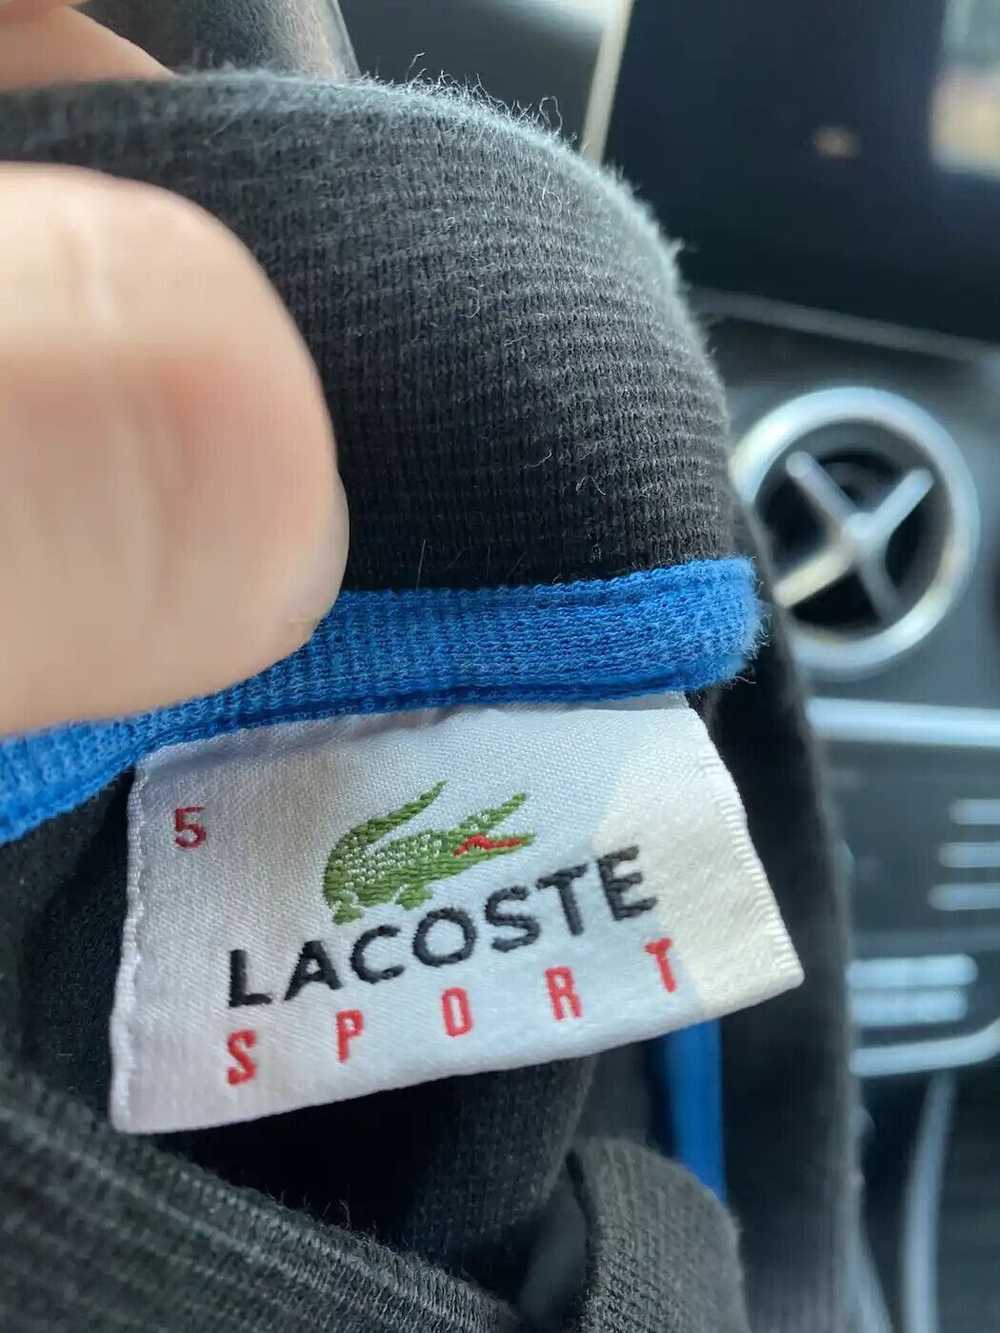 Lacoste Lacoste Sport SS polo shirt size L - image 3